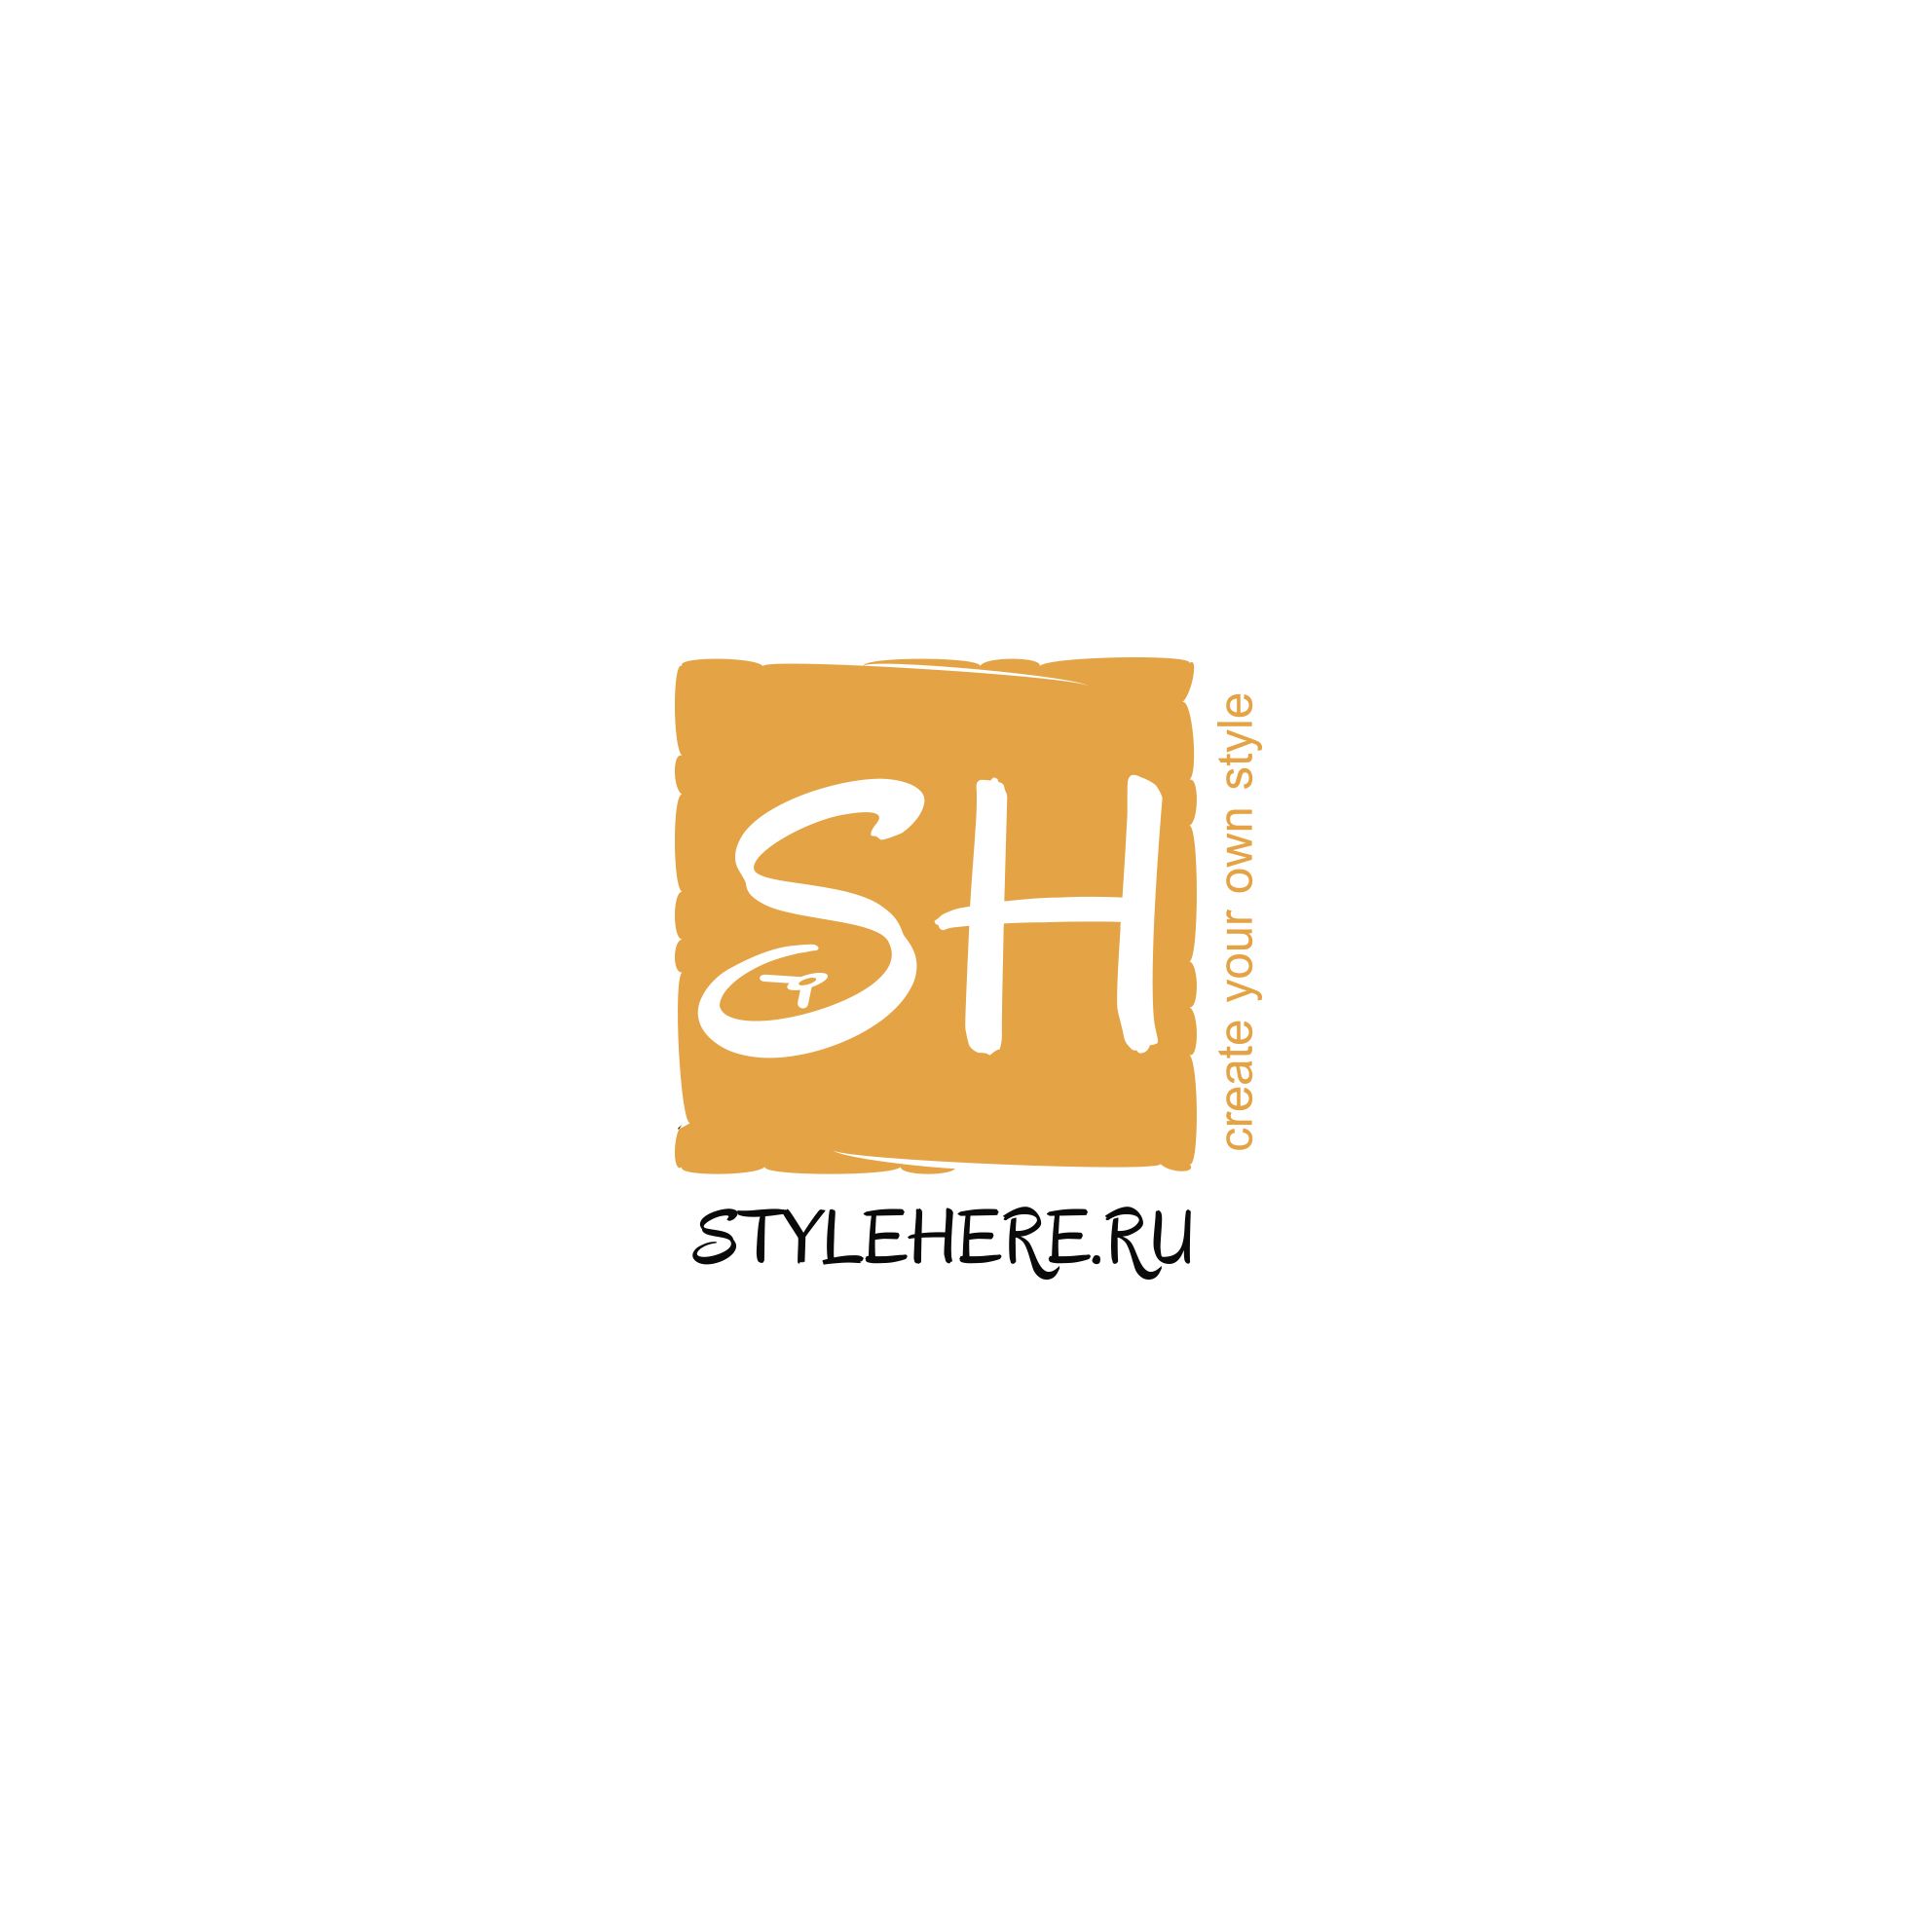 Логотип для интернет-магазина stylehere.ru - дизайнер mkravchenko